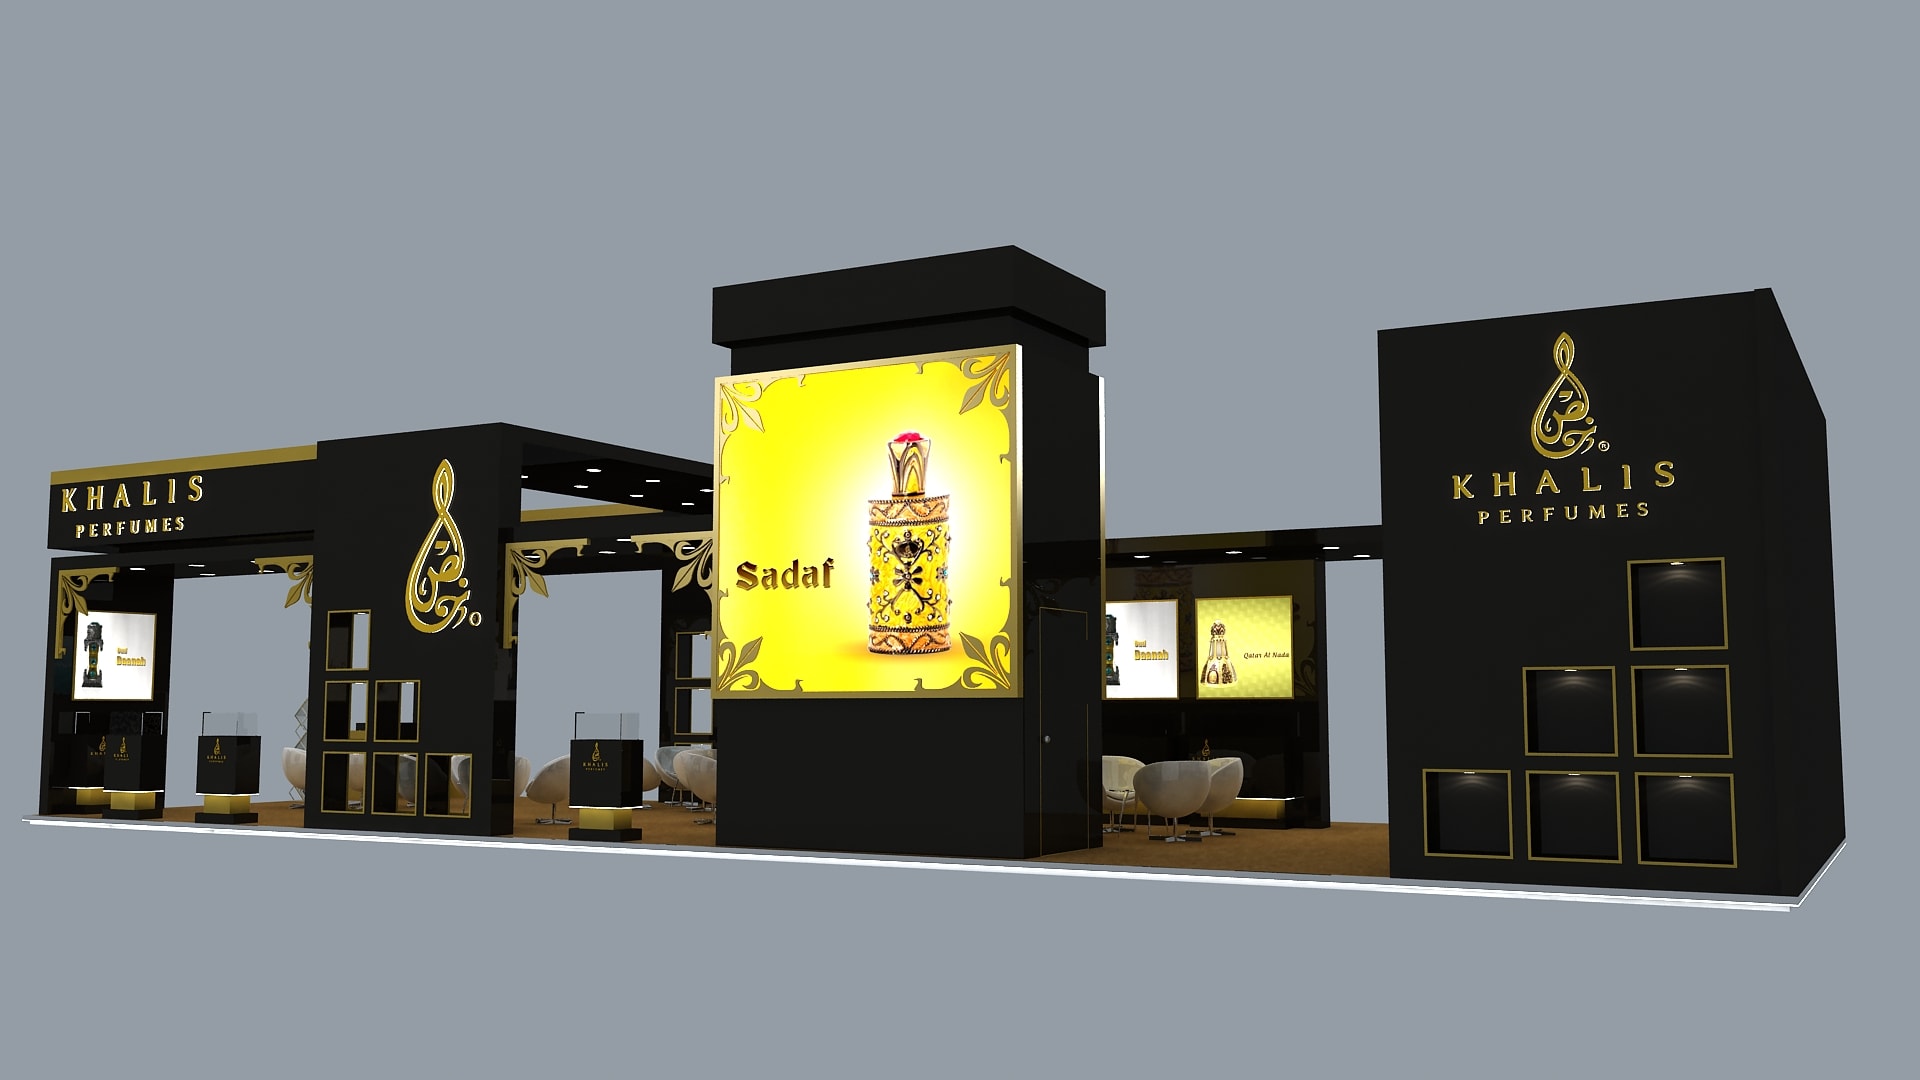 khalis perfume exhibition stand design in uae